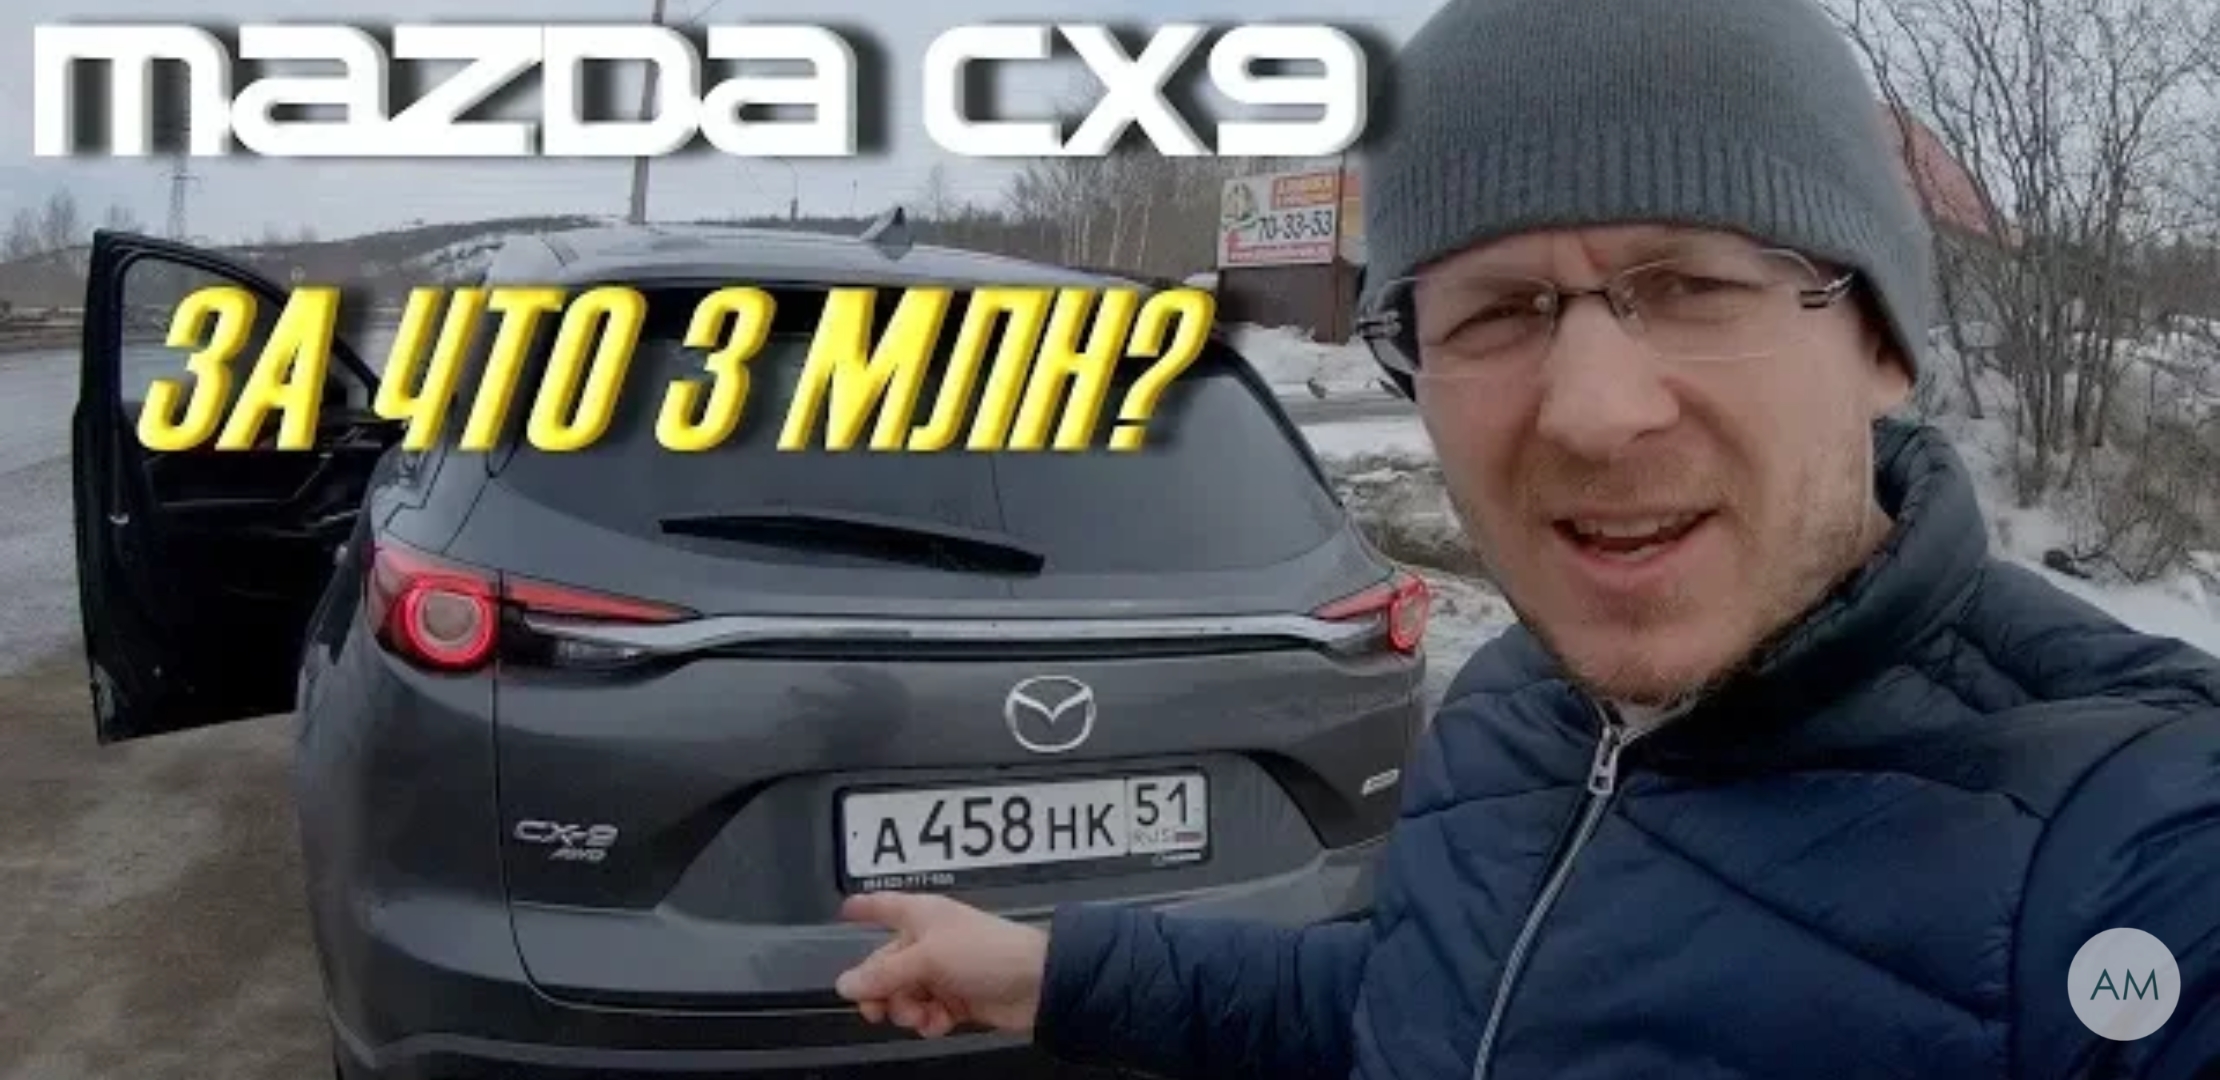 Анонс видео-теста Почему Mazda CX-9 Стоит 3.000.000 Р.